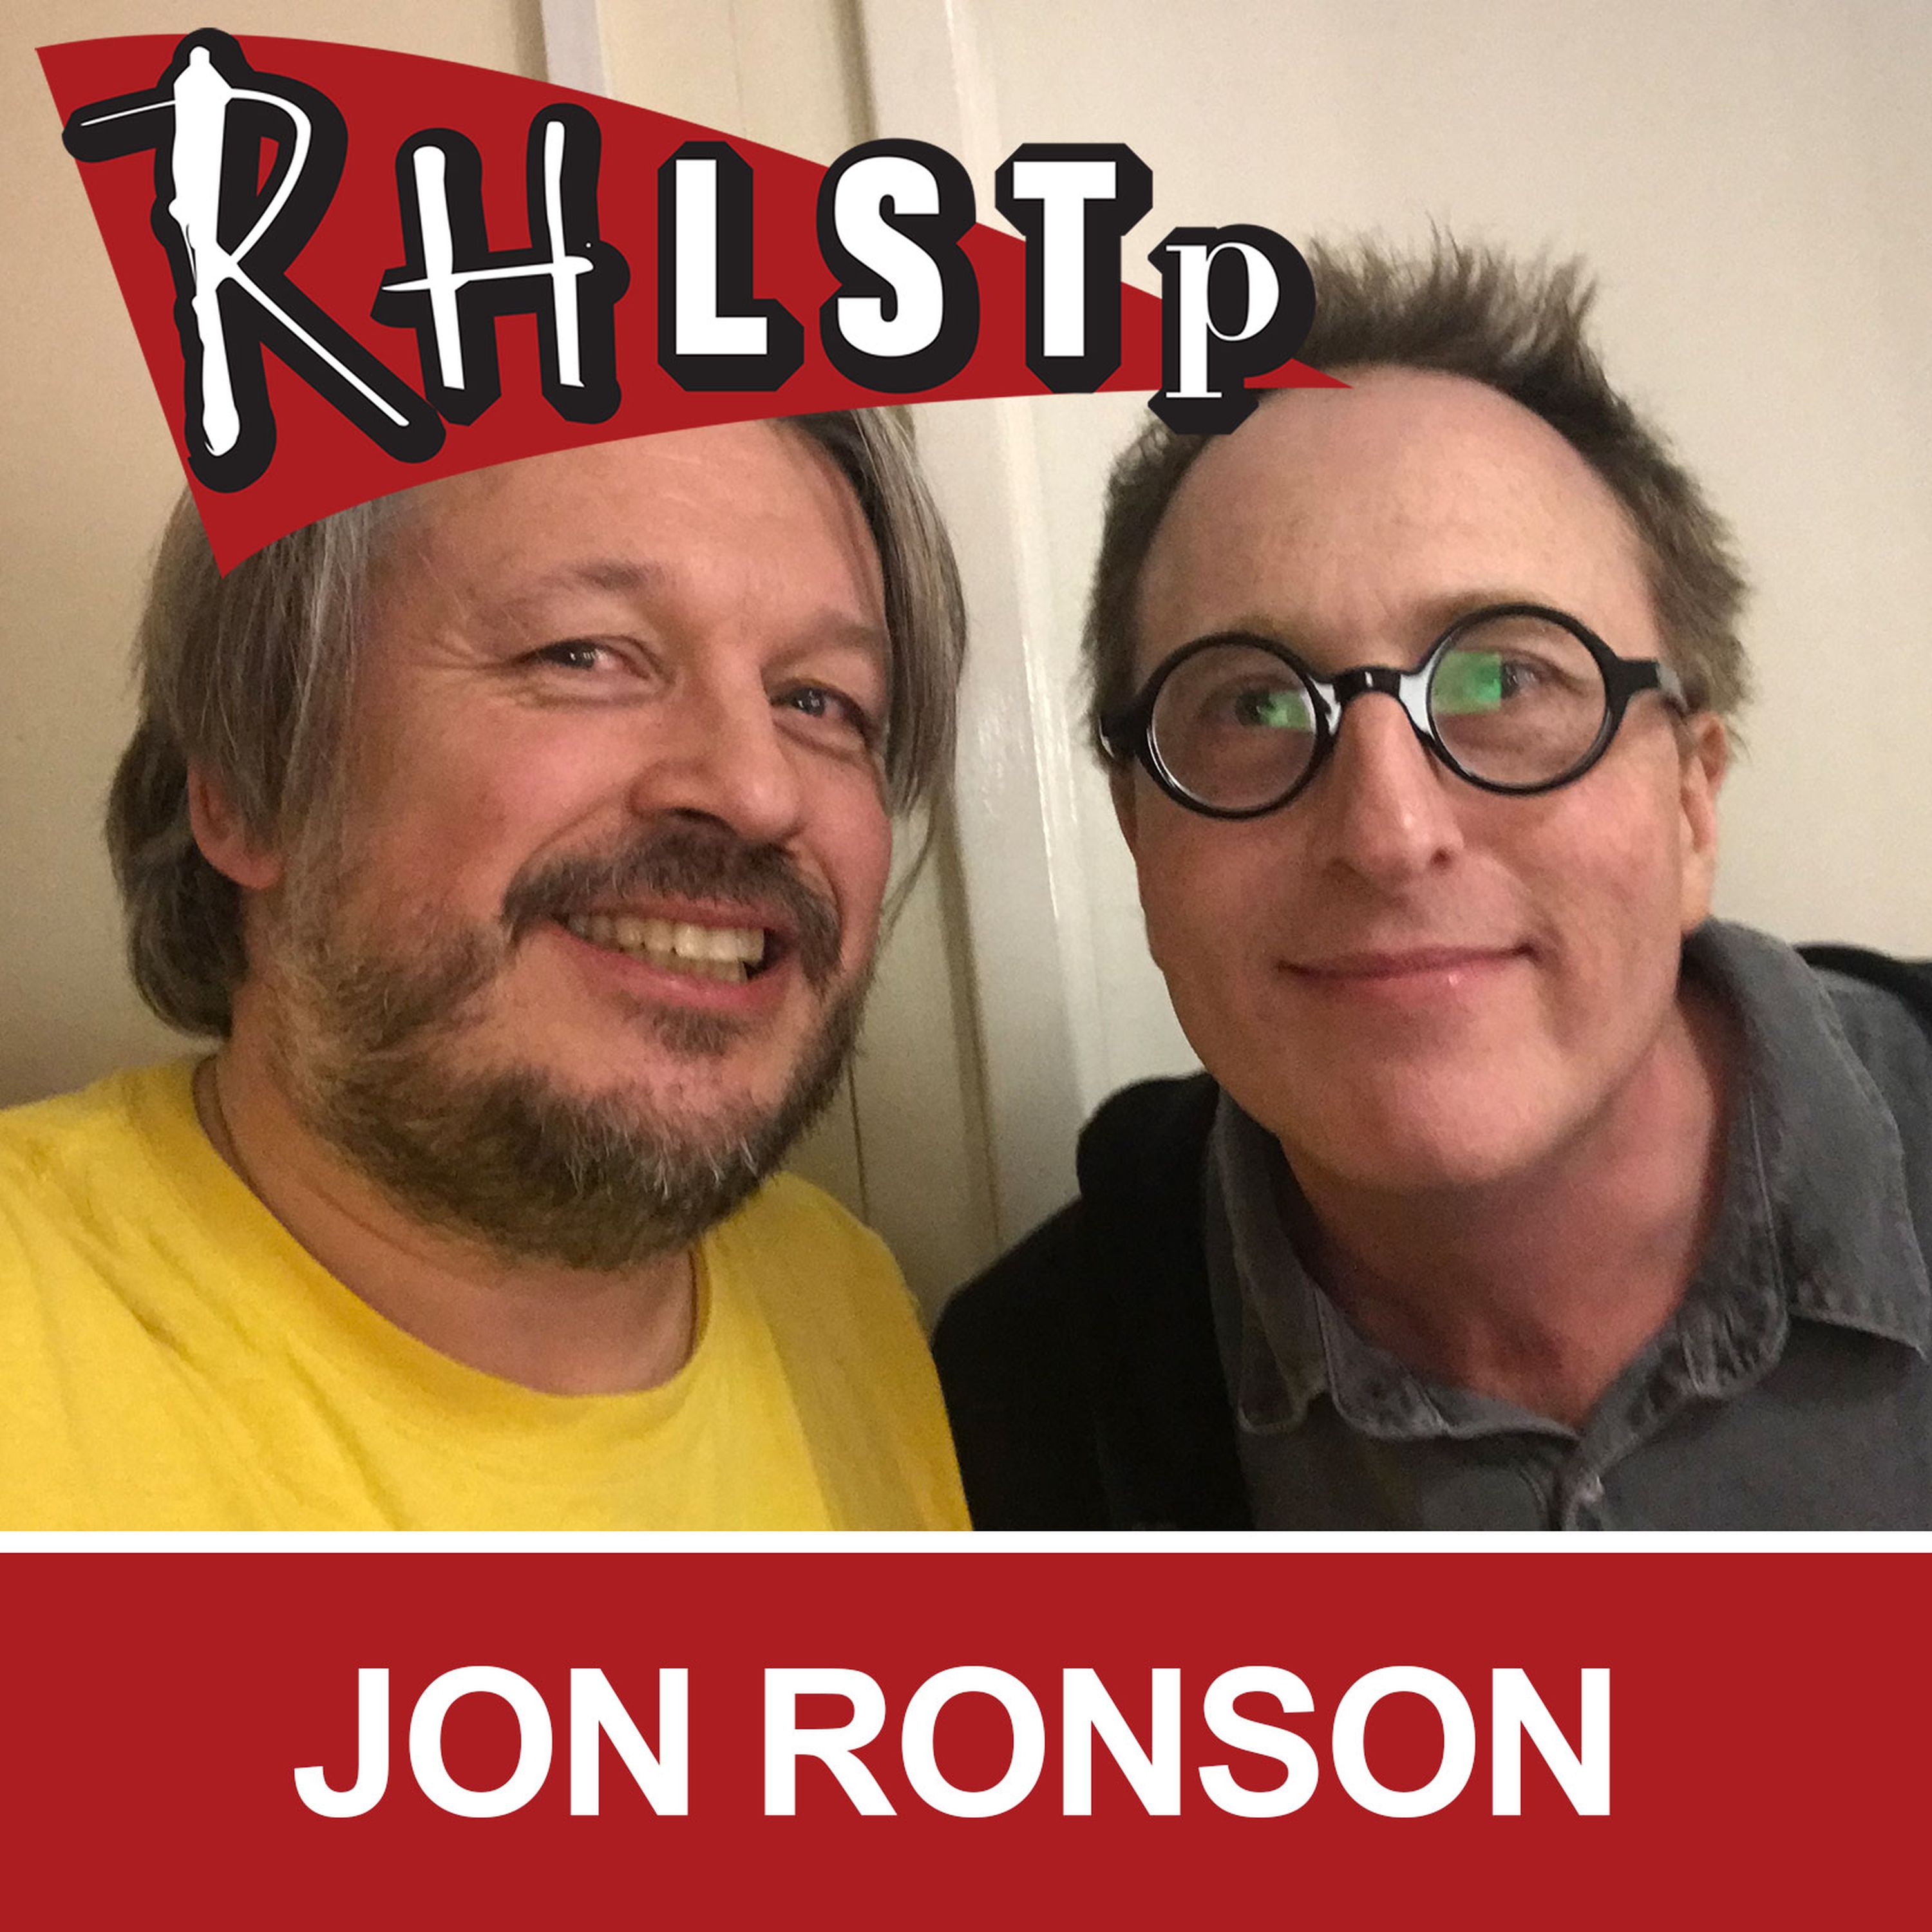 Jon Sinha Sex - RHLSTP 202 - Jon Ronson - RHLSTP with Richard Herring | Lyssna hÃ¤r ...